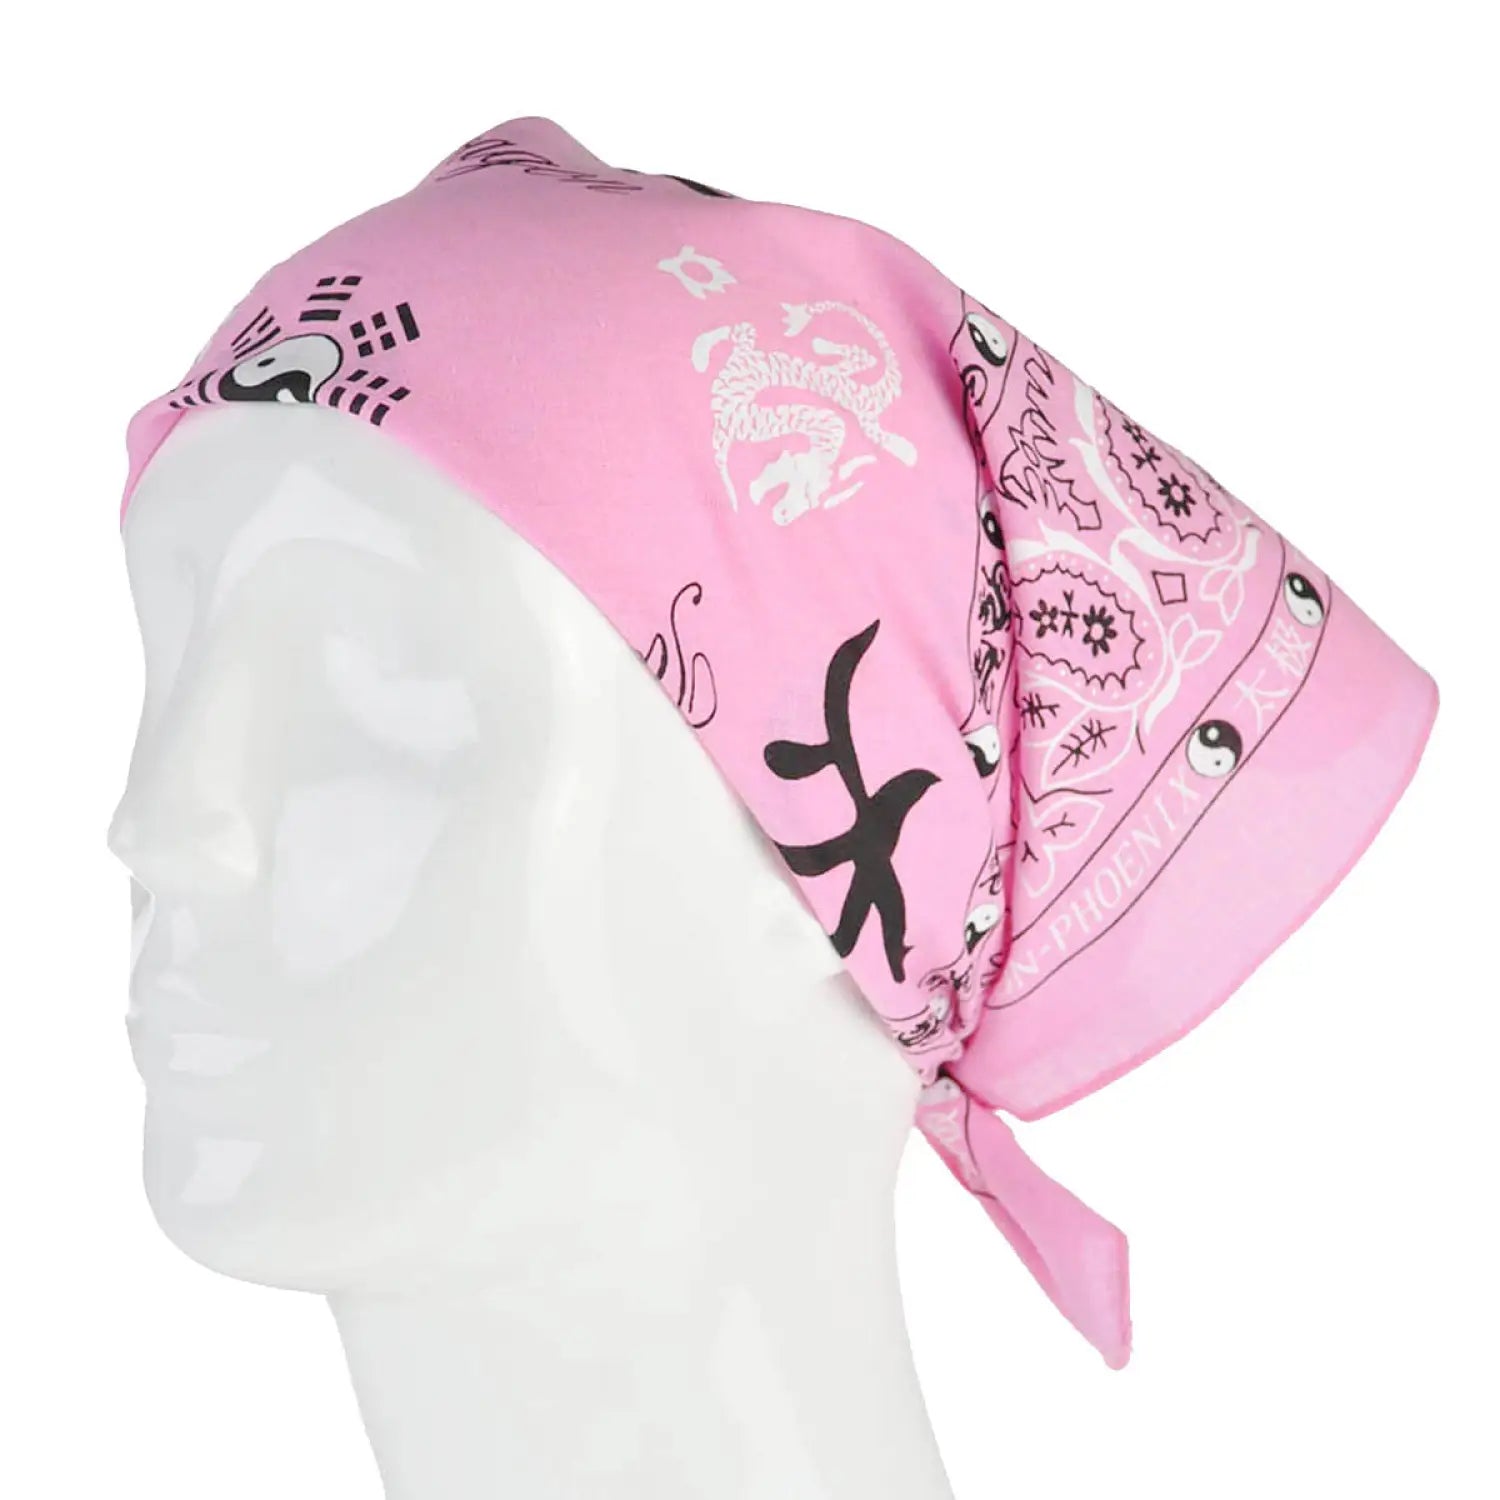 Pink paisley bandana hat with black and white design - Ying & Yang Paisley Print Square Bandana in 100% Cotton